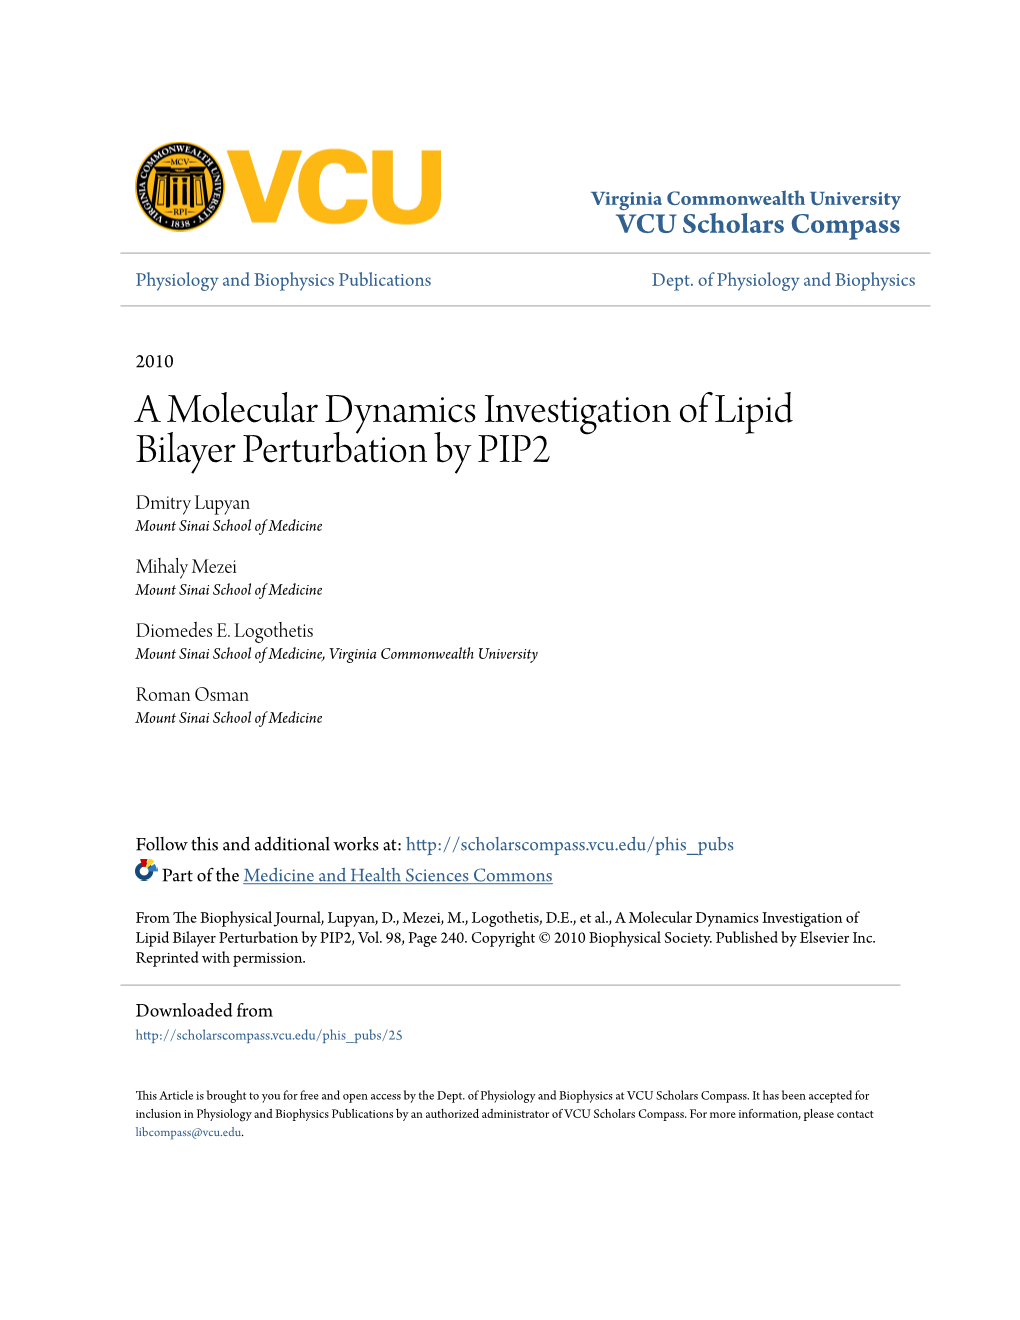 A Molecular Dynamics Investigation of Lipid Bilayer Perturbation by PIP2 Dmitry Lupyan Mount Sinai School of Medicine